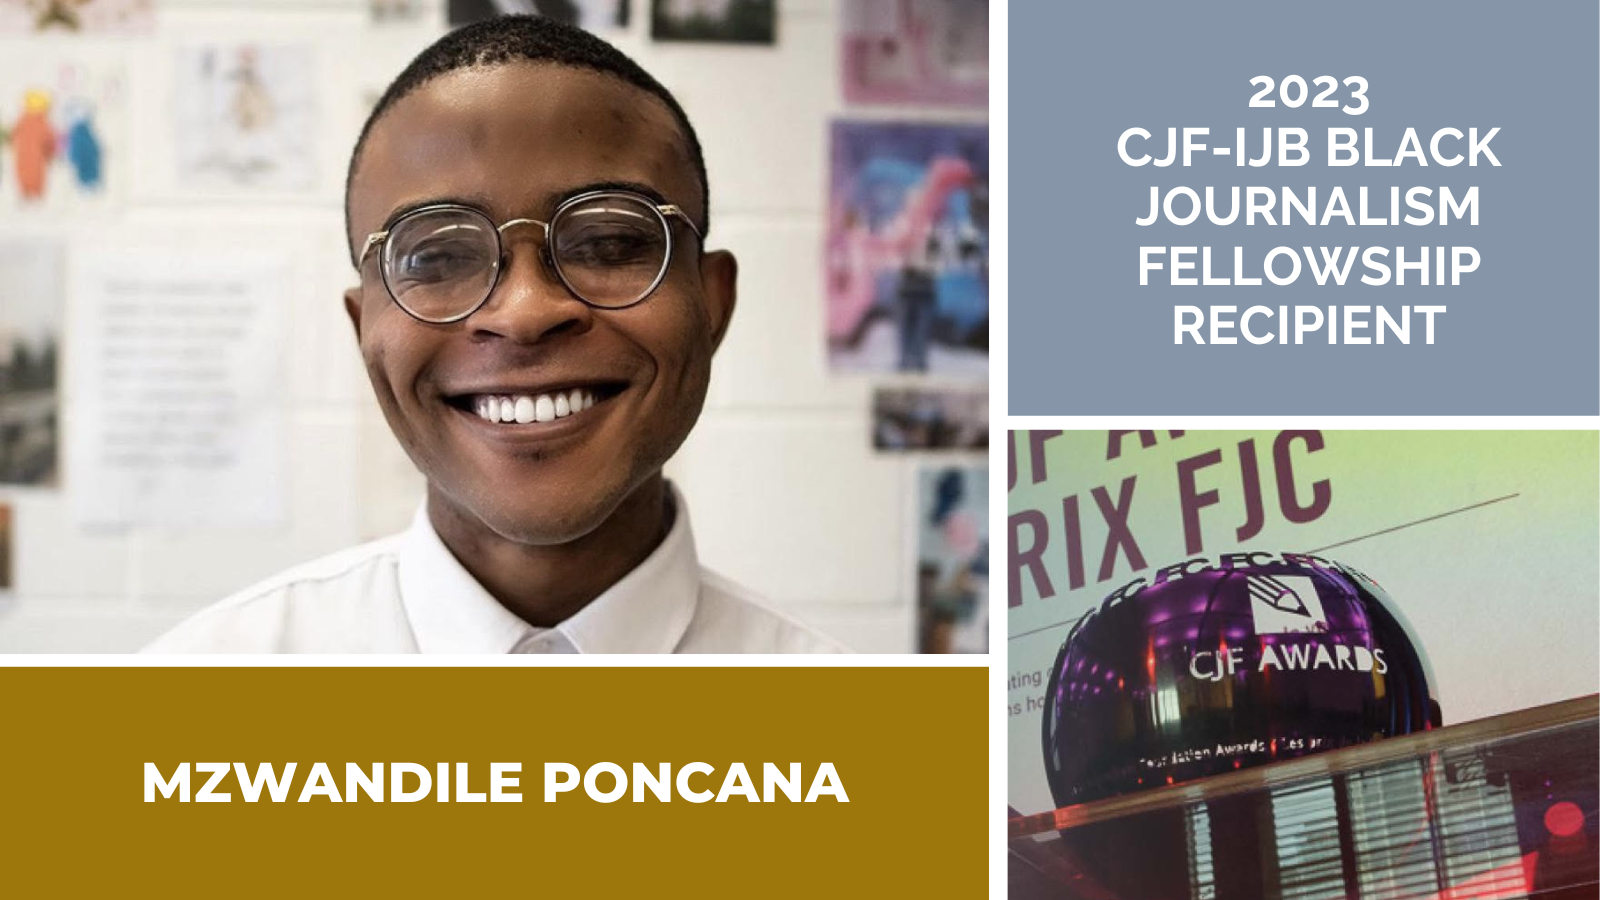 2023 CJF-IJB Black Journalism Fellowship Recipient - Mzwandile Poncana